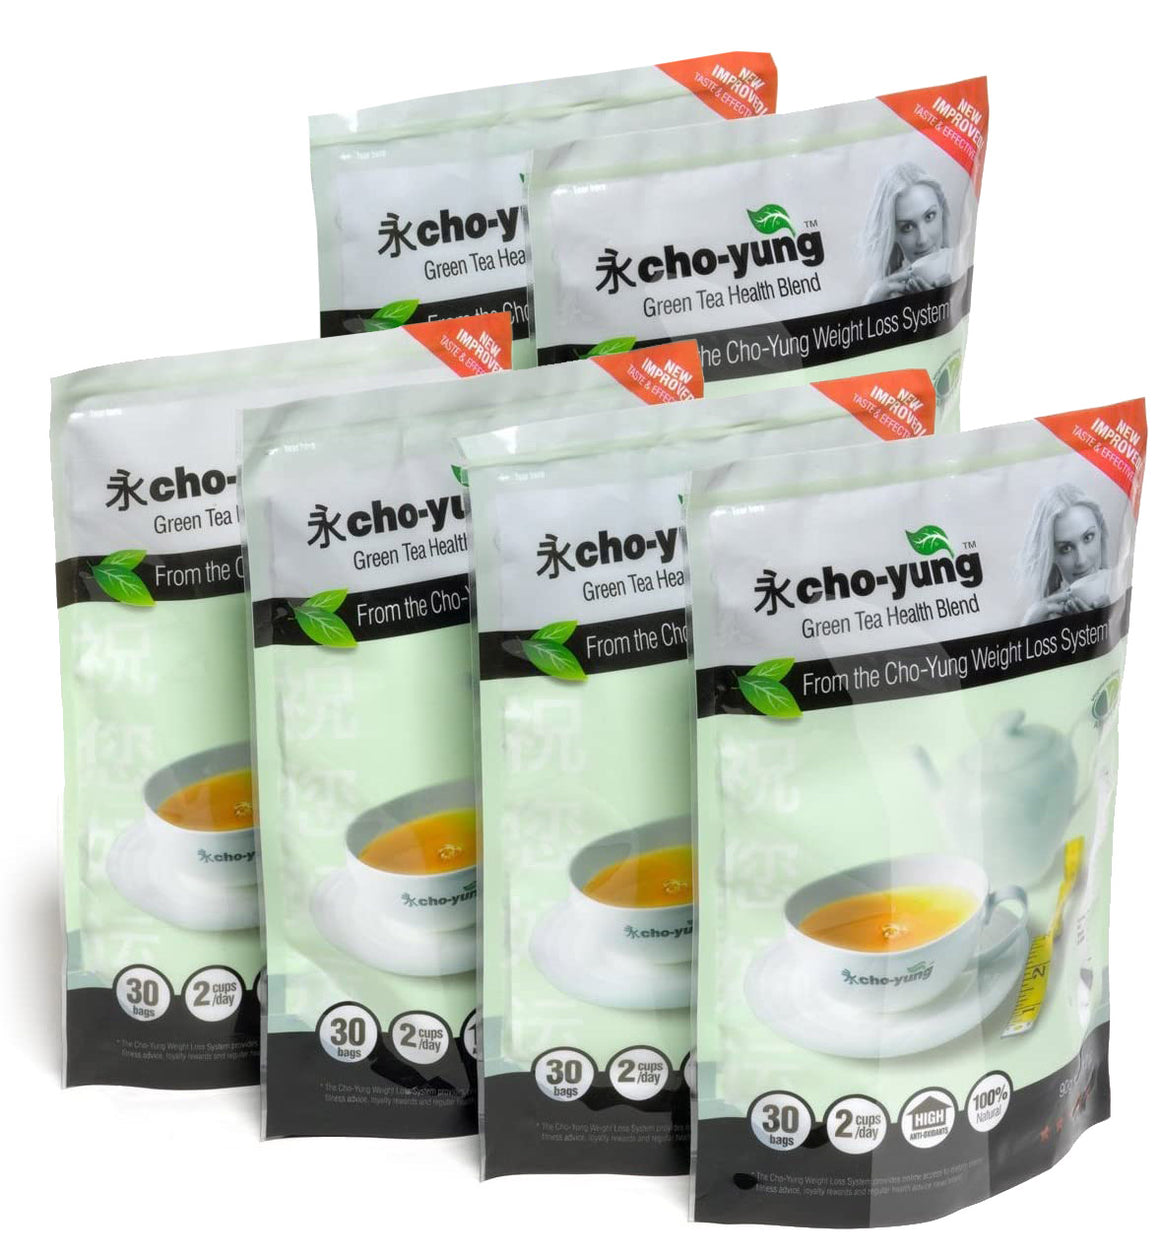 SPECIAL OFFER: 6 PACKS CHO-YUNG - Enjoy The Taste & A Slimmer waist (30 tea bags per pack)